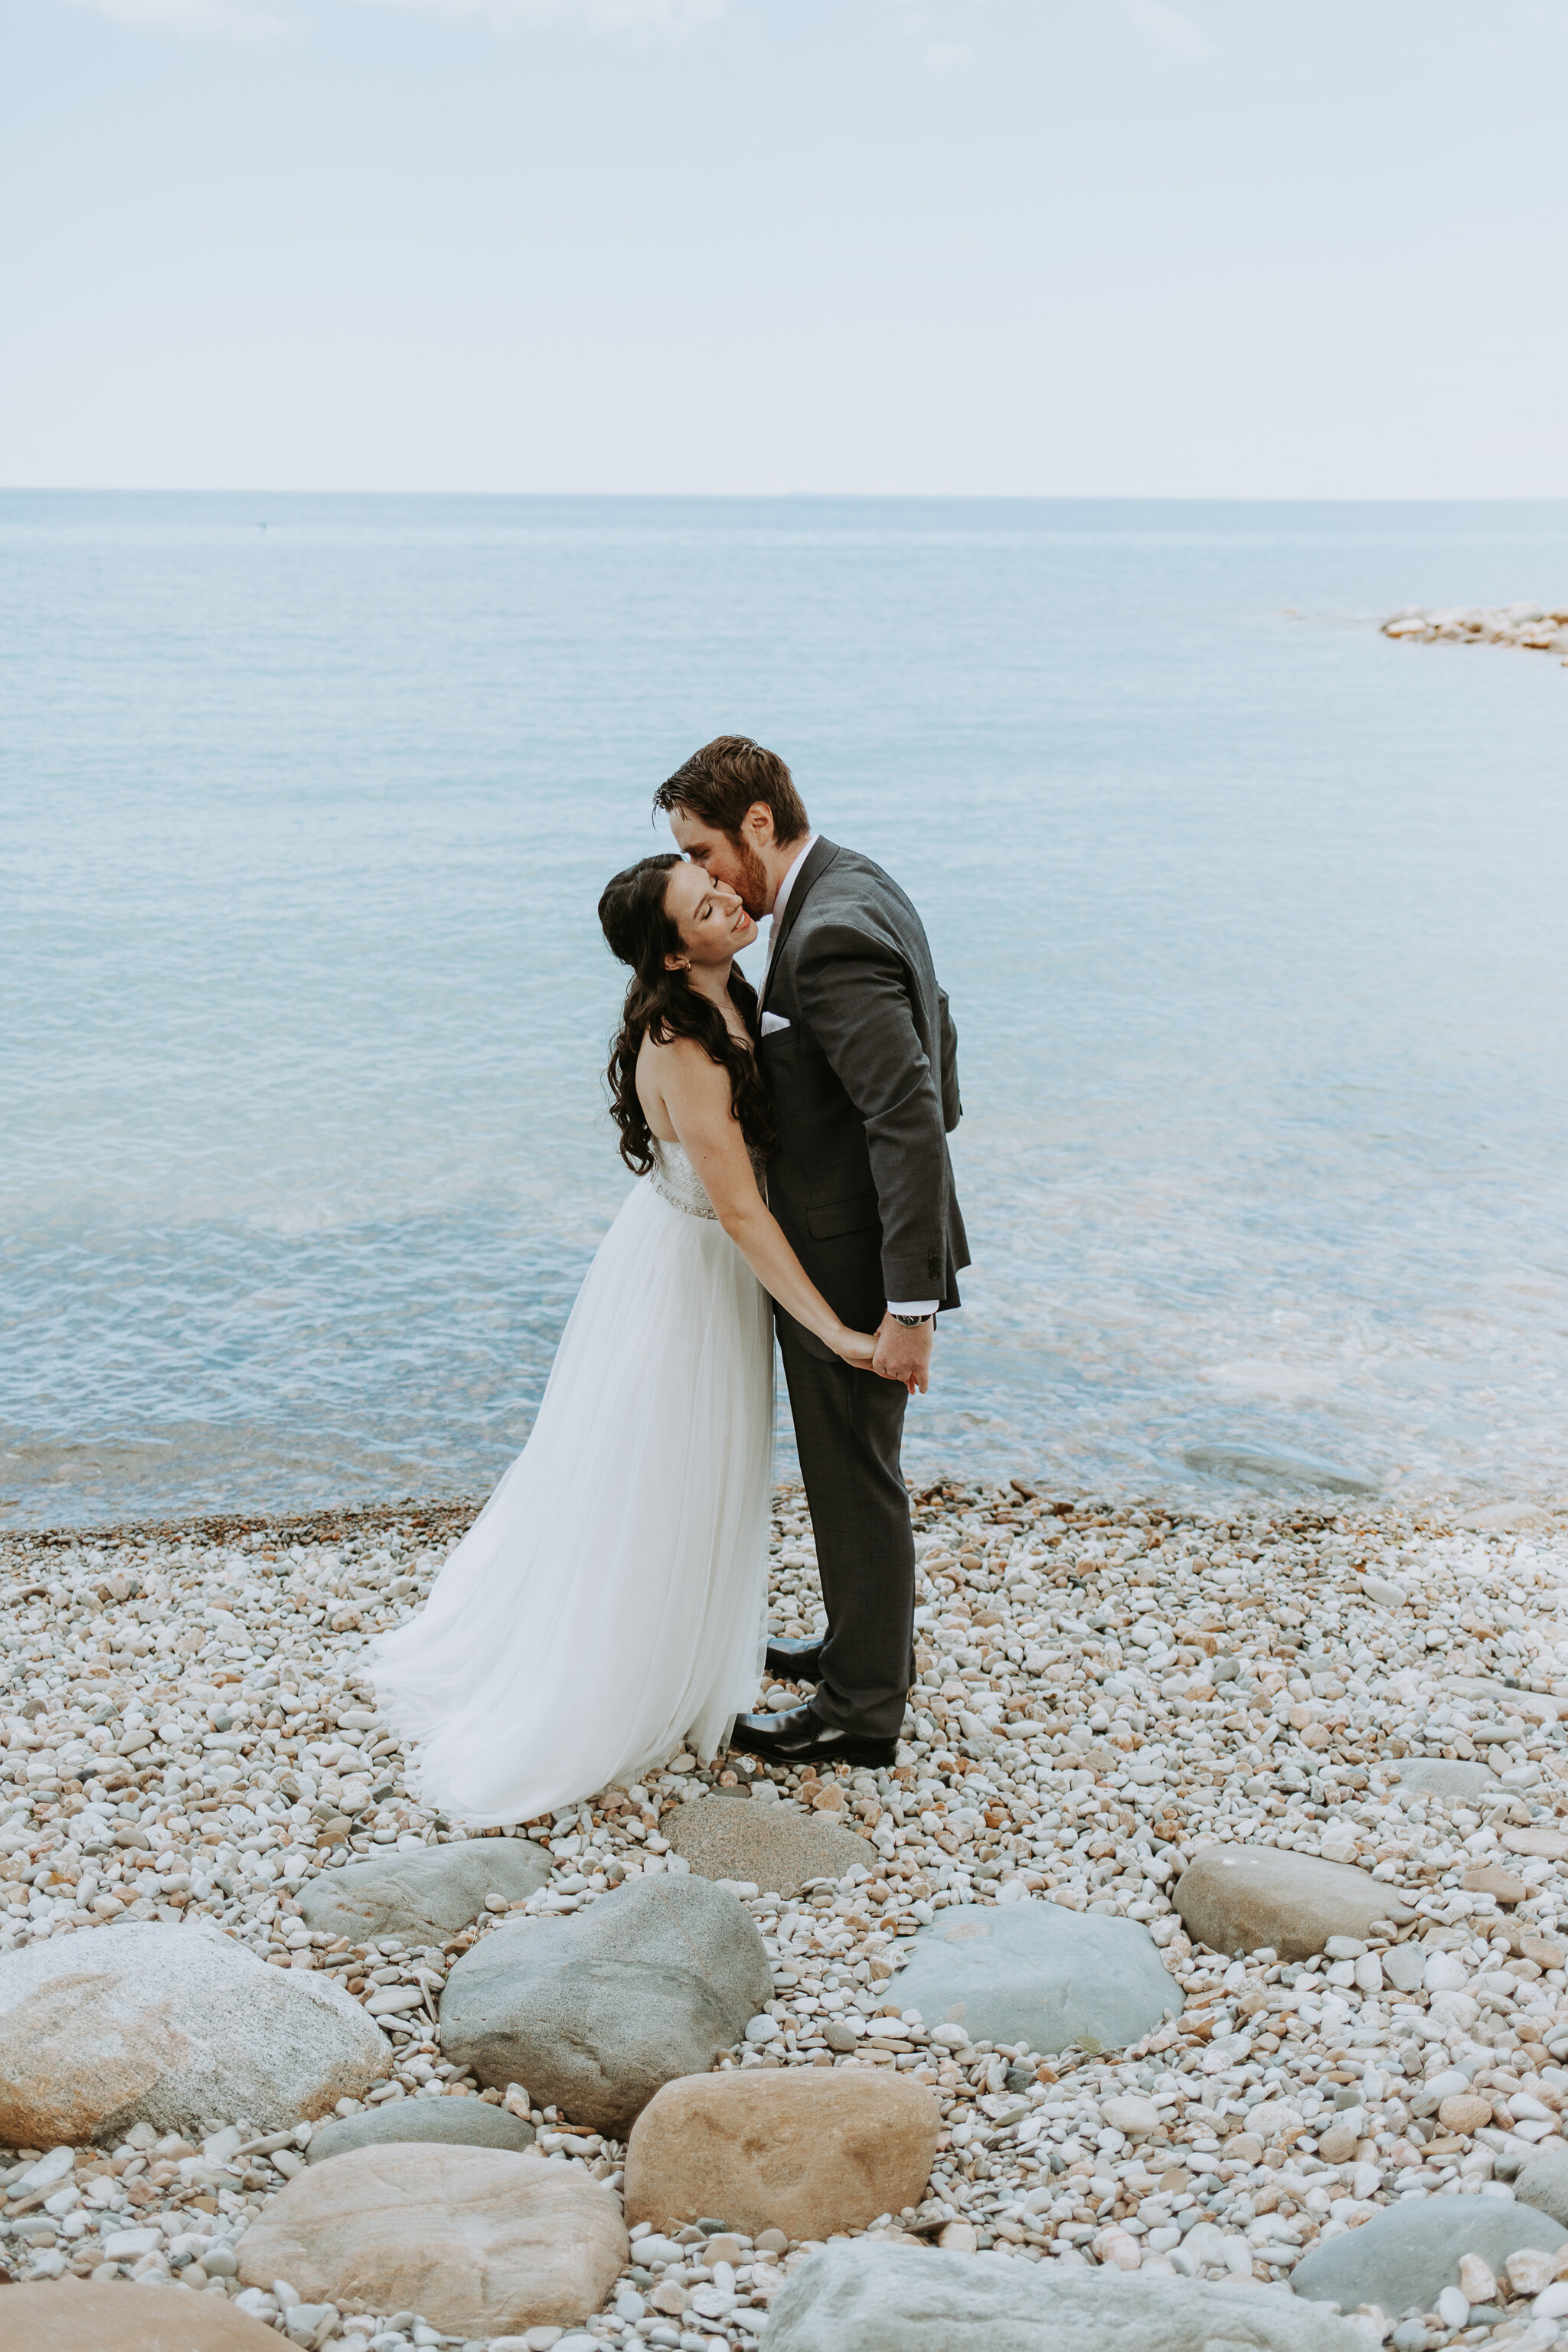 Summer wedding portraits on Georgian bay beach